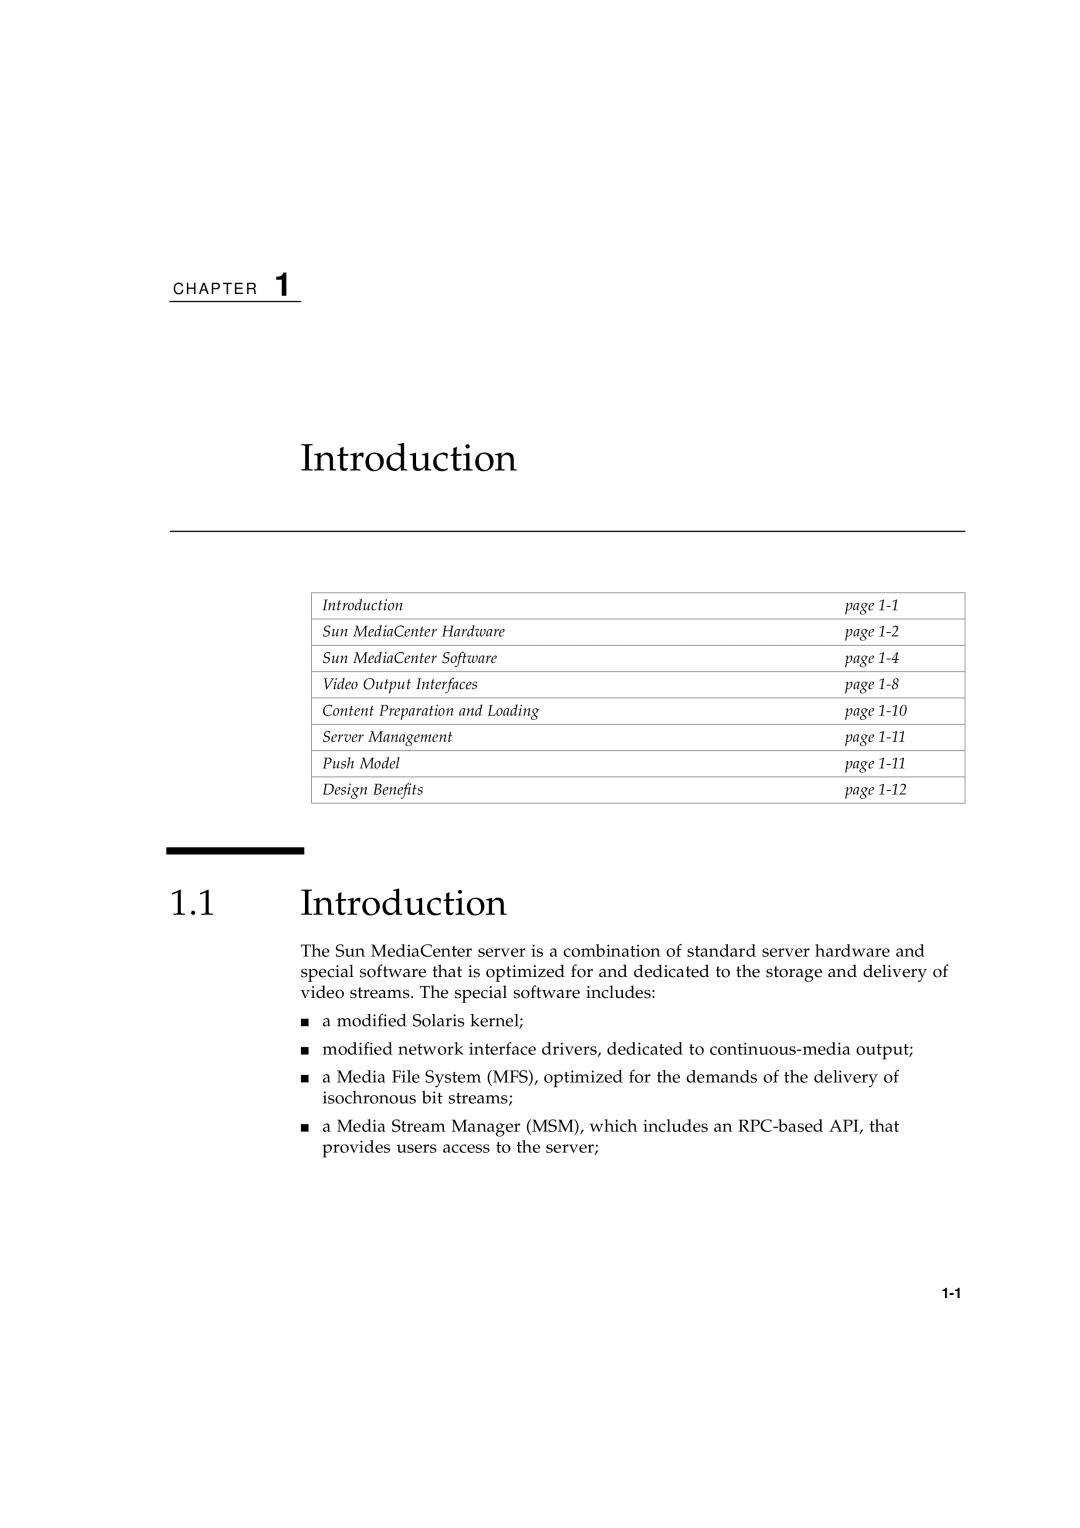 Sun Microsystems 2.1 manual Introduction 